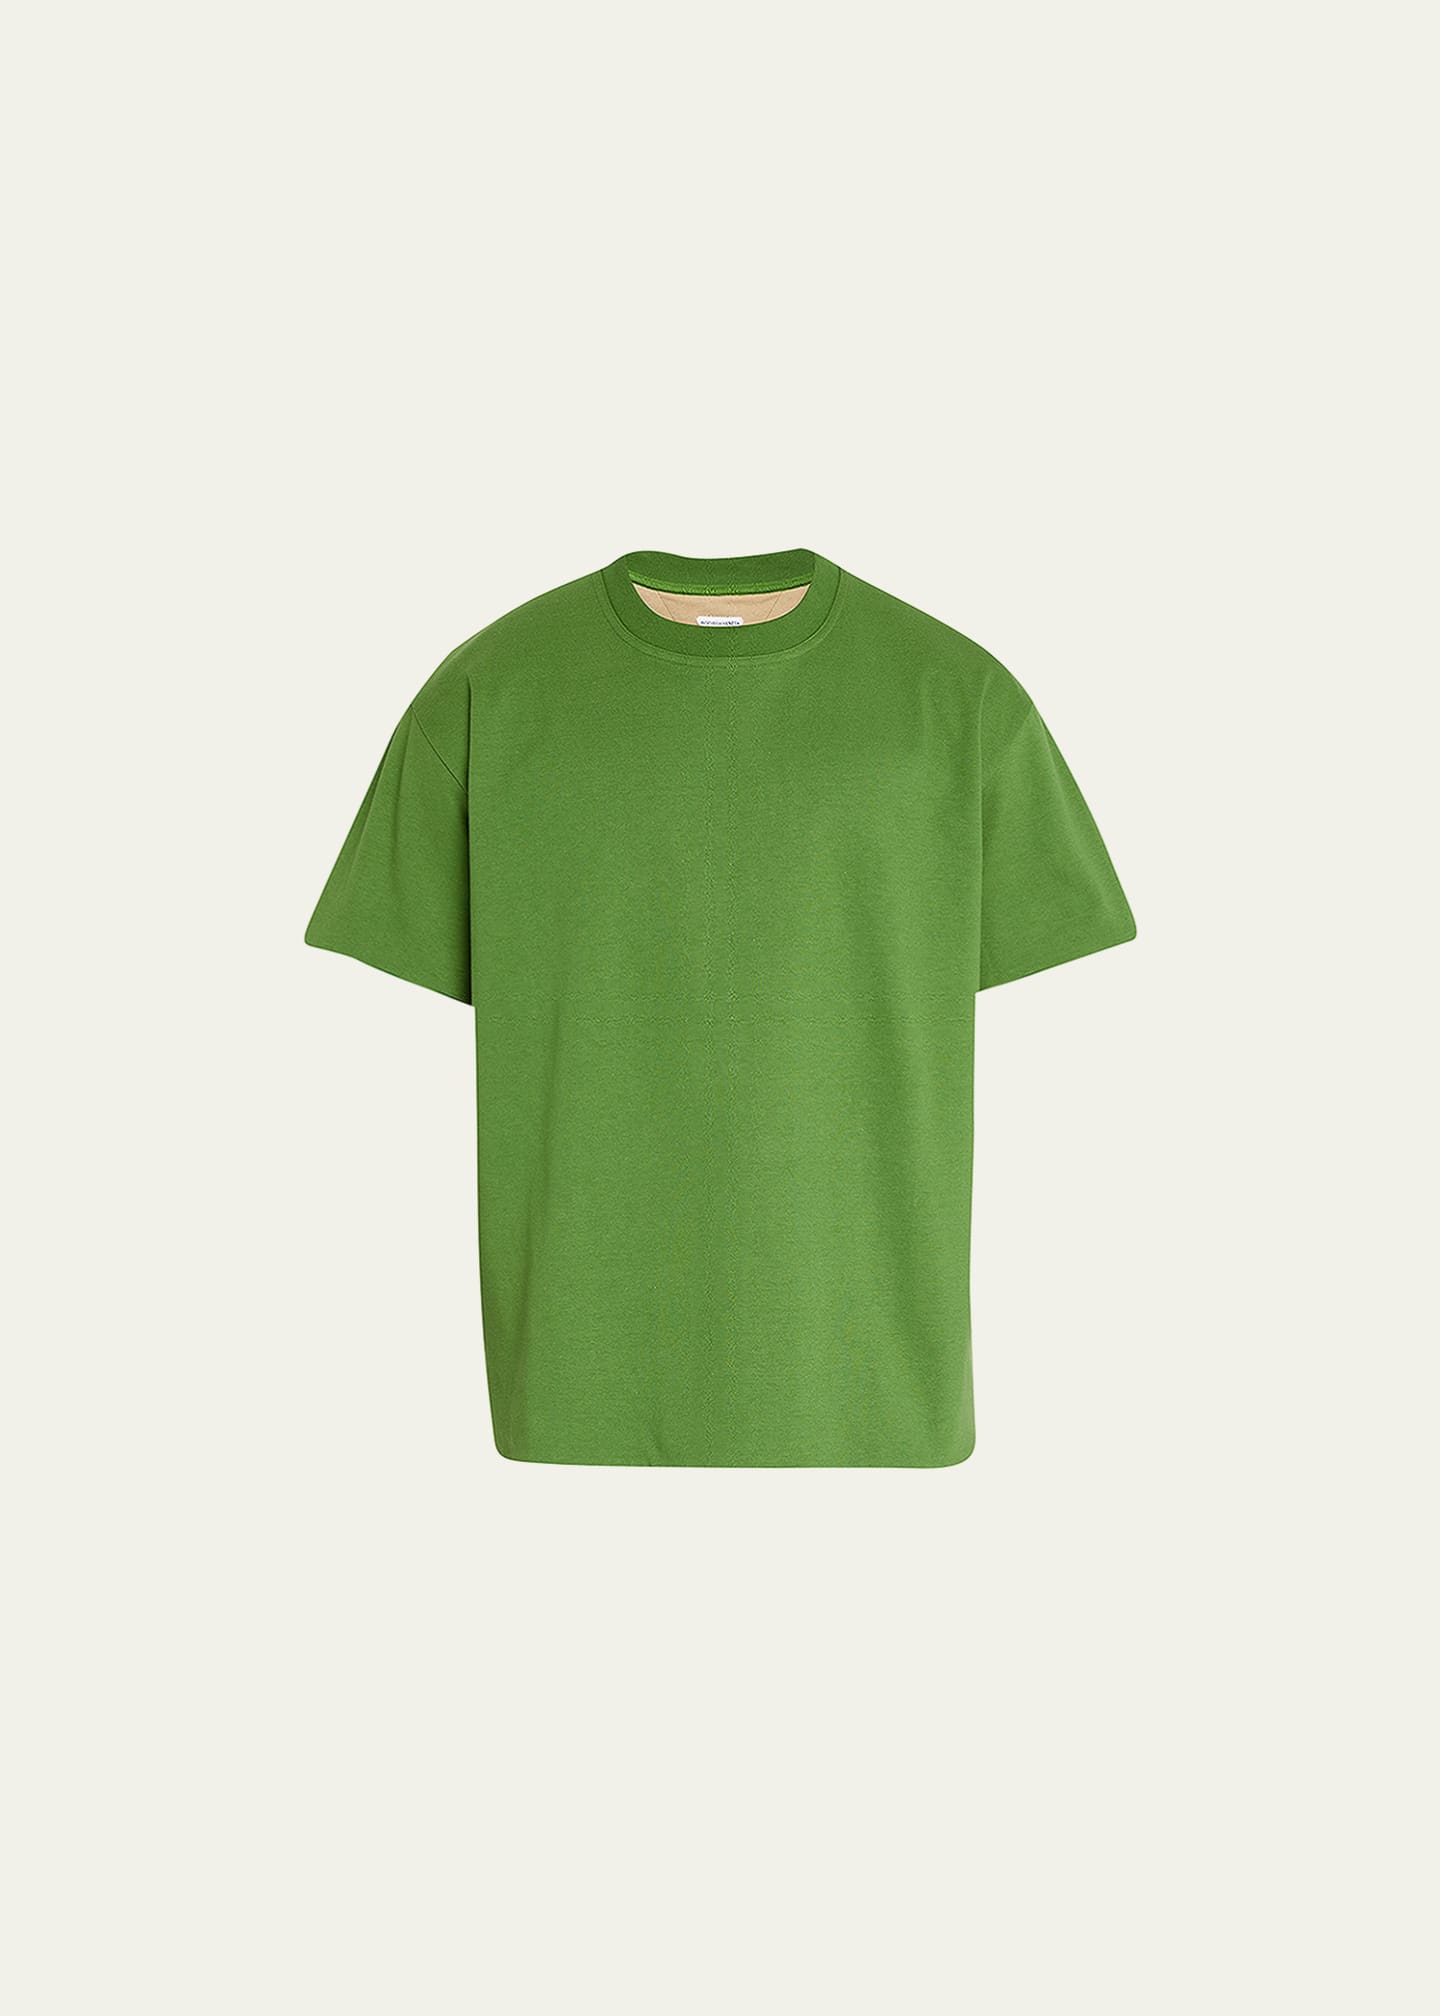 Bottega Veneta Green Crewneck T-Shirt